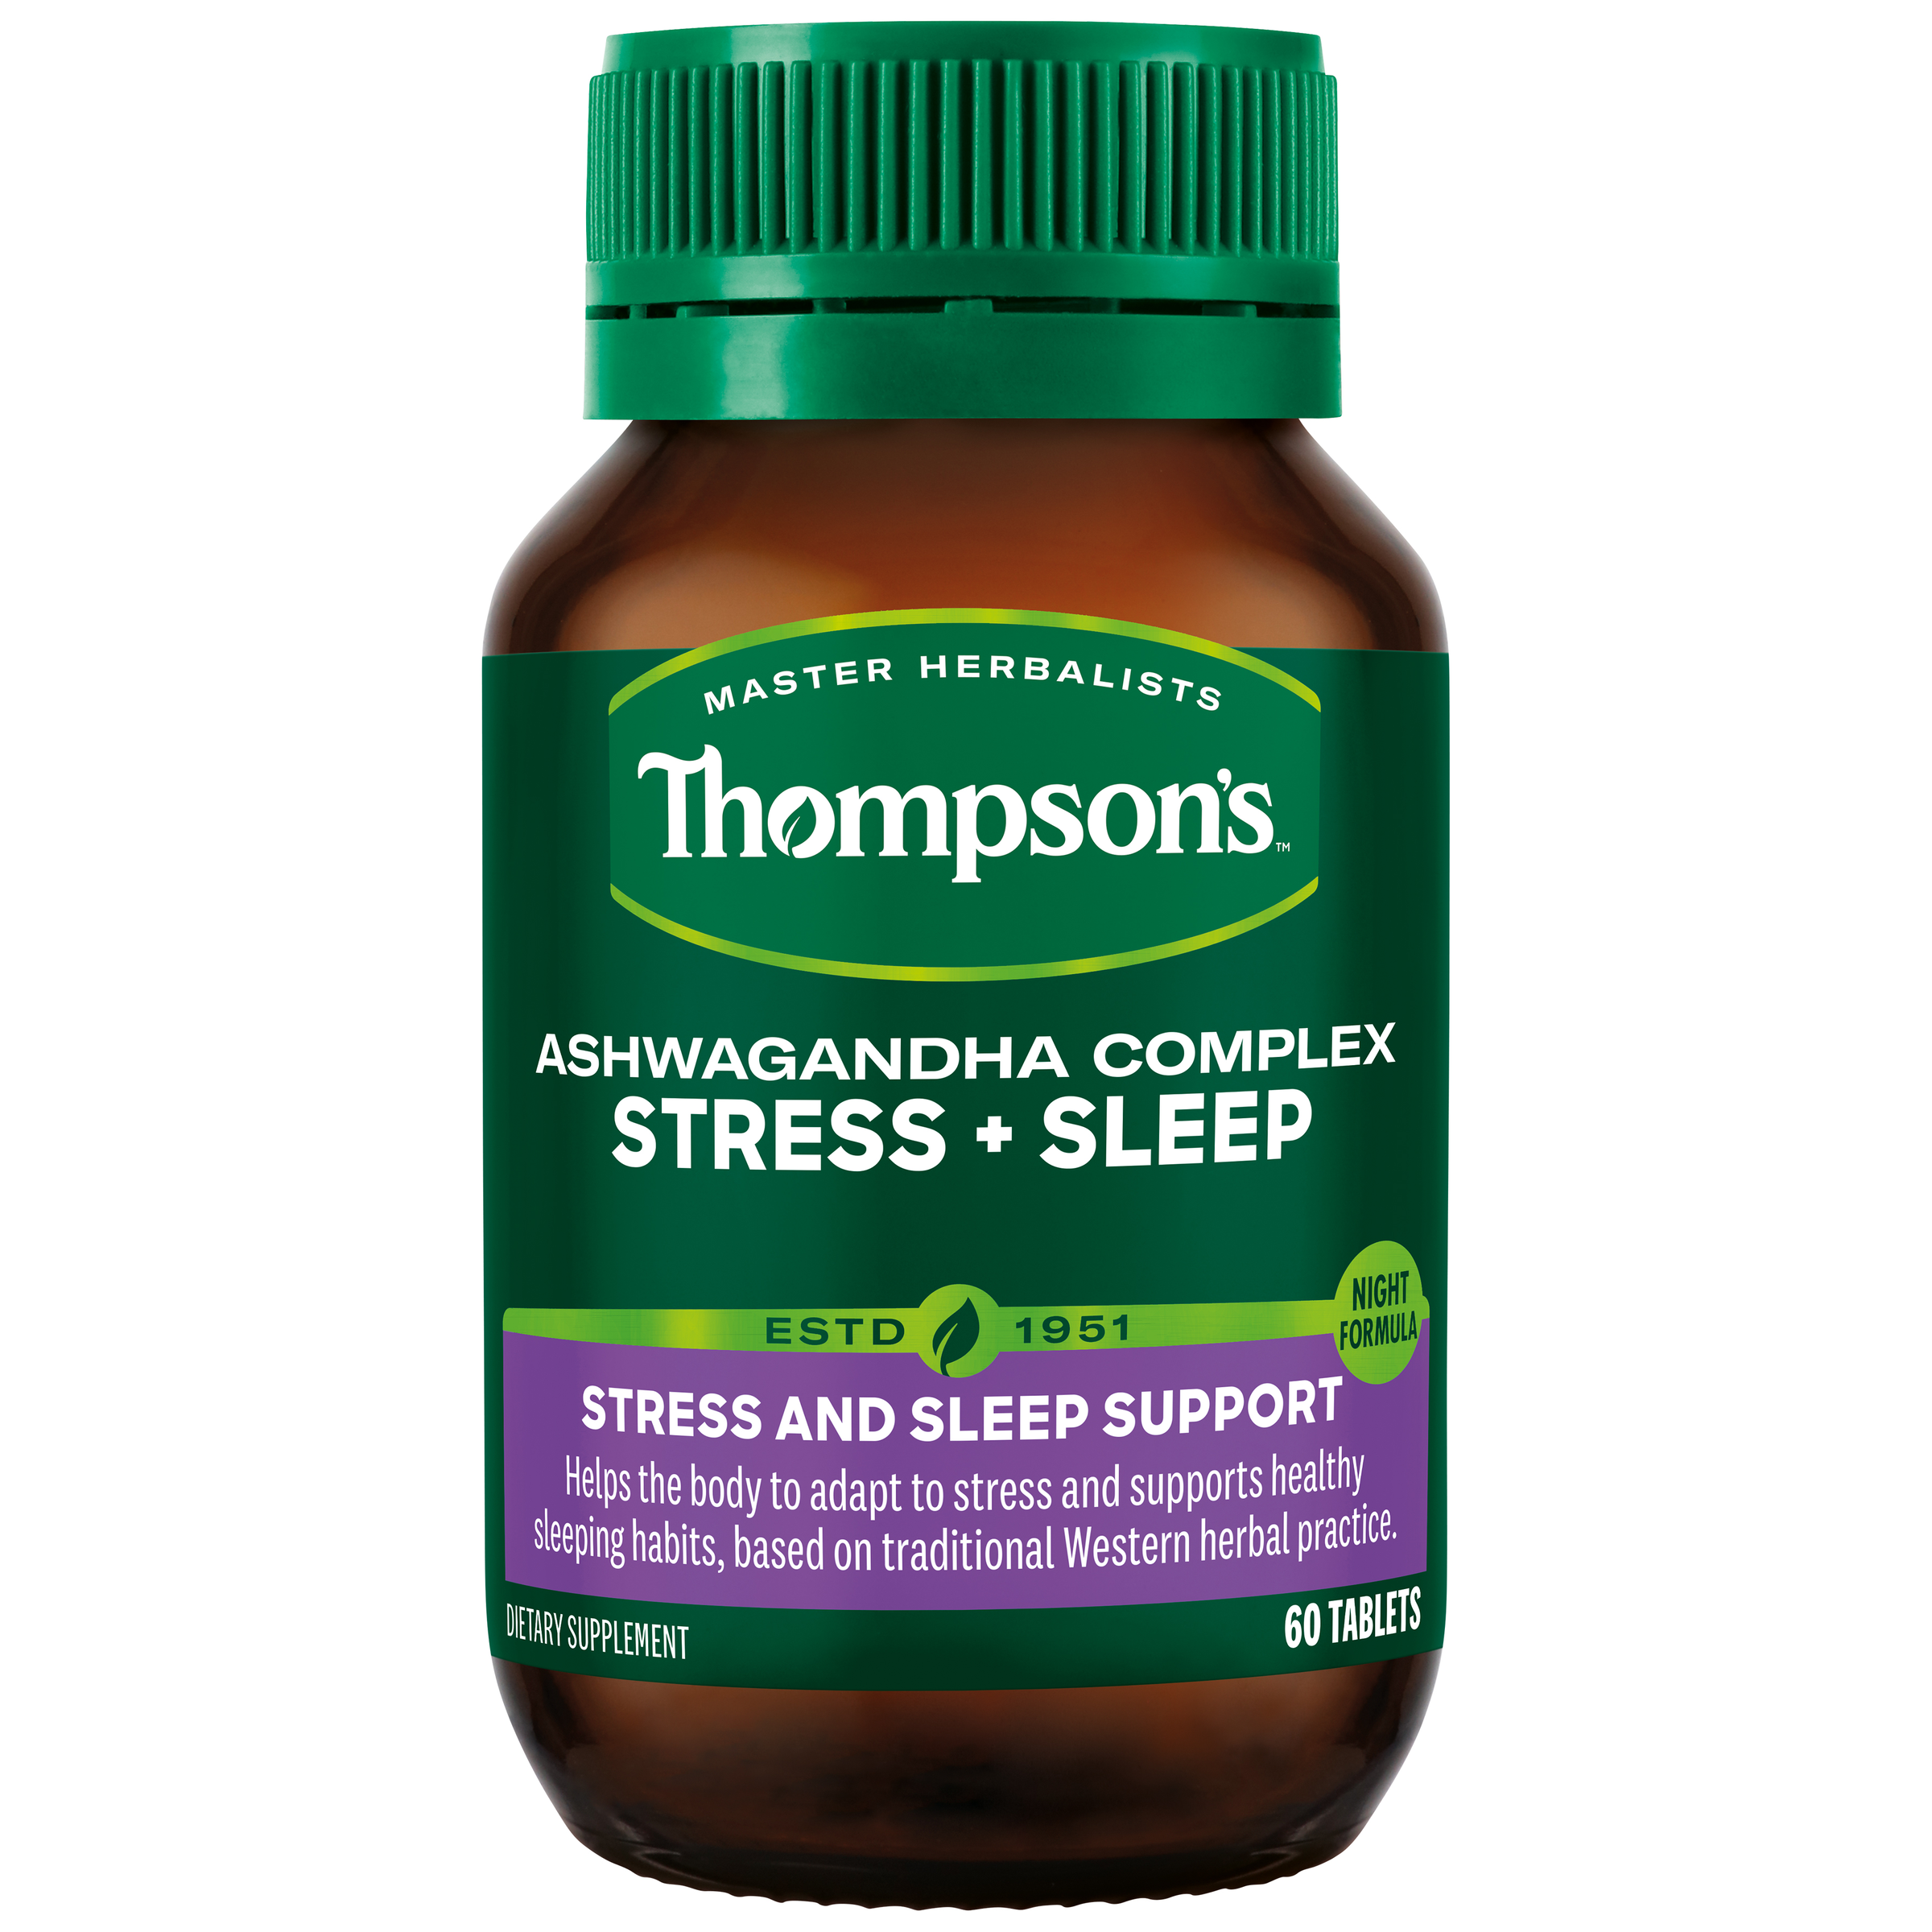 Thompsons Ashwagandha Complex Stress + Sleep 60 Tablets